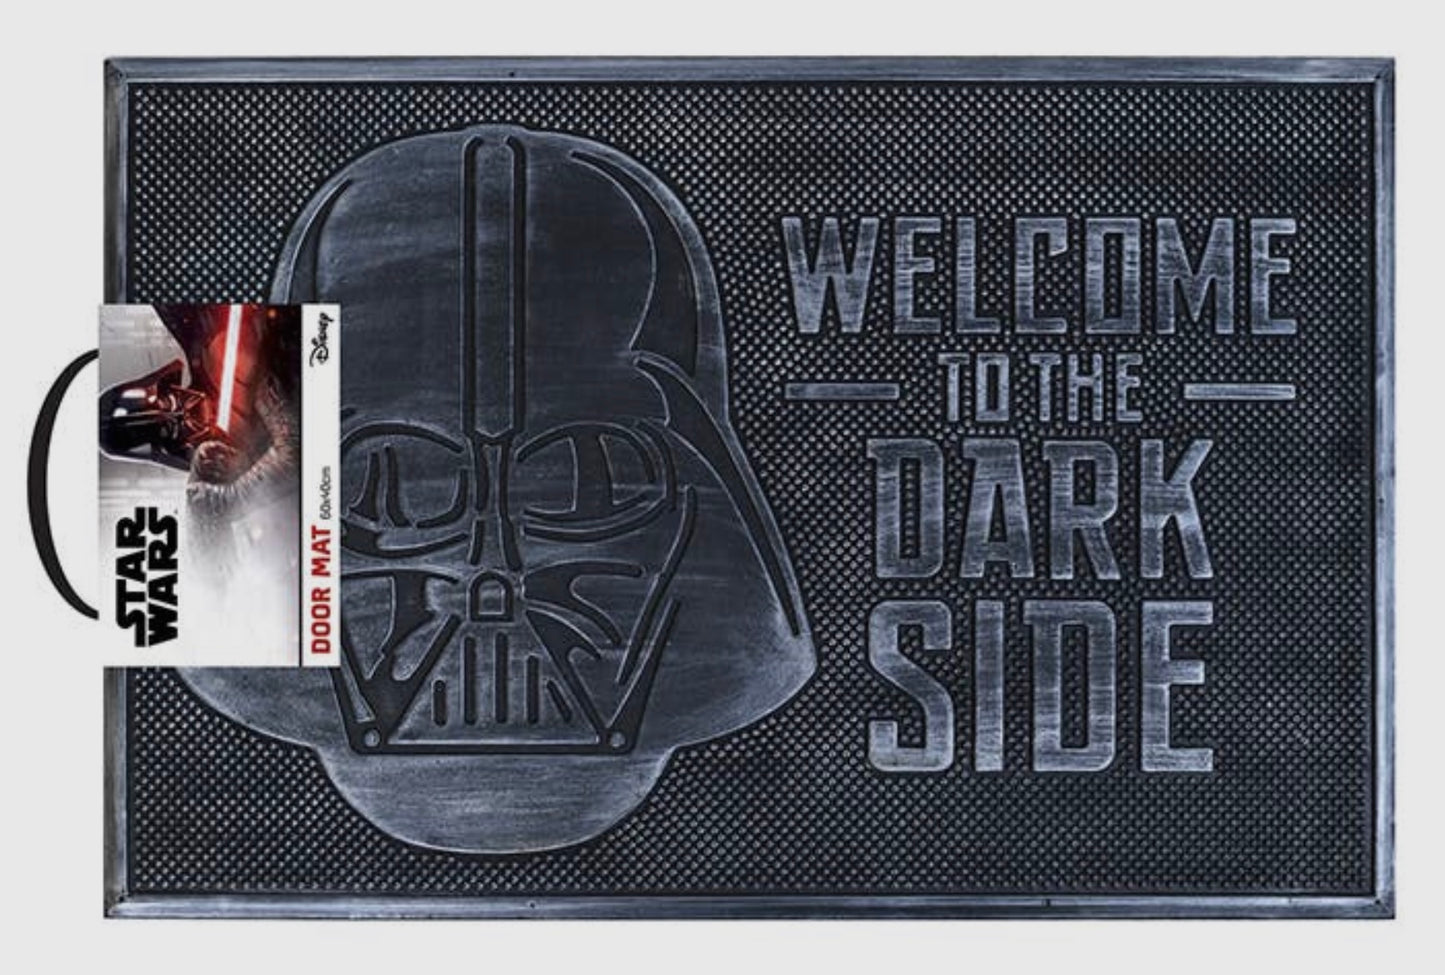 Star Wars (Welcome to the Dark Side) Rubber Doormat.